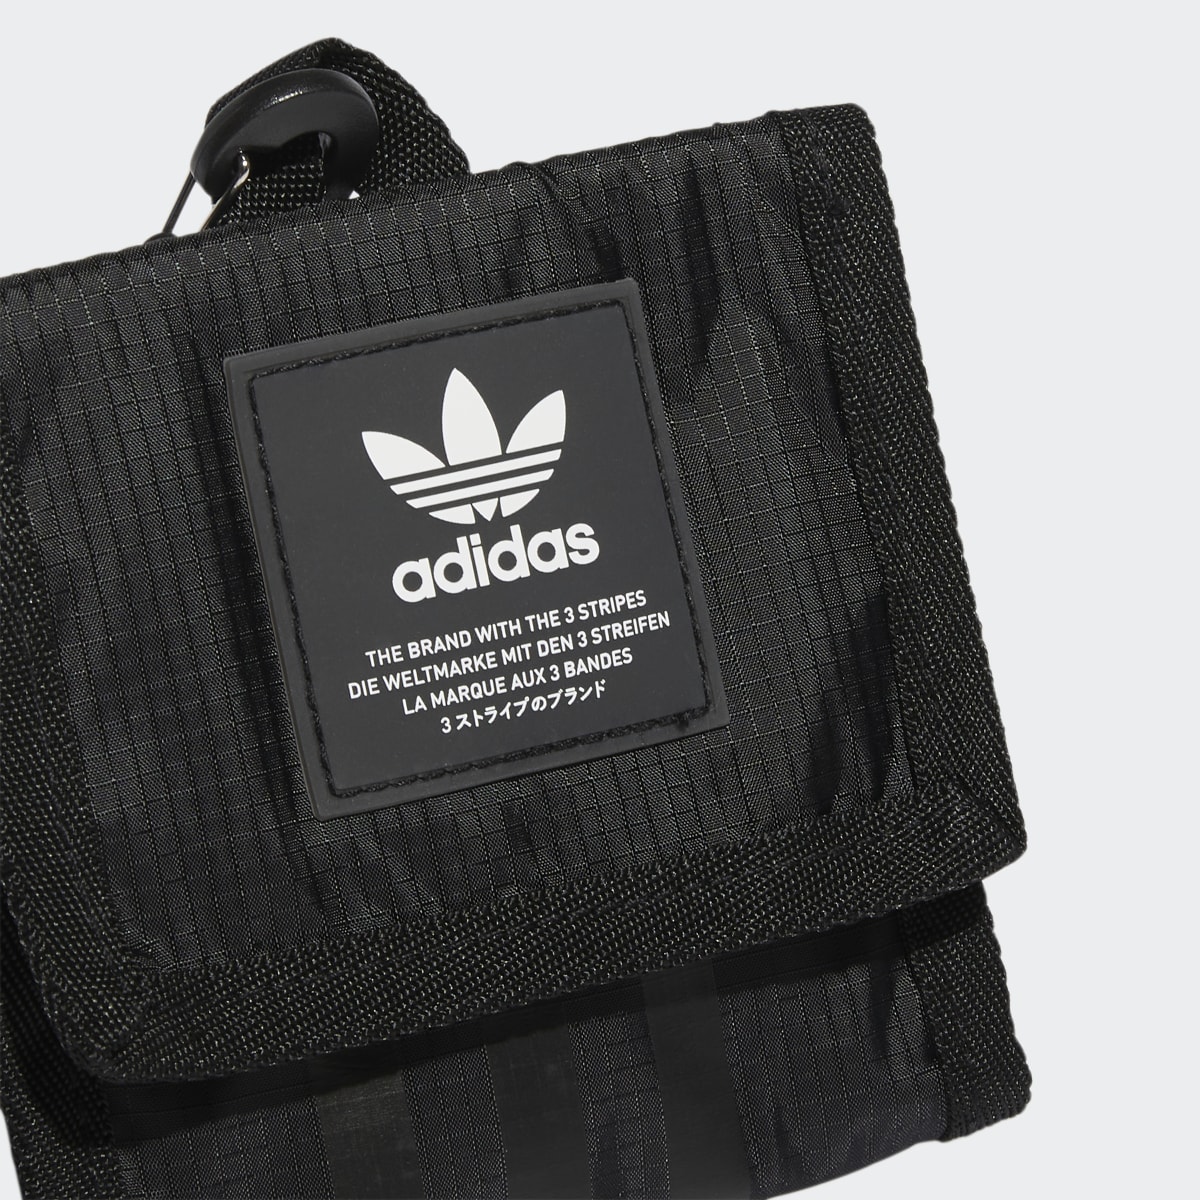 Adidas Lanyard Crossbody Bag. 6